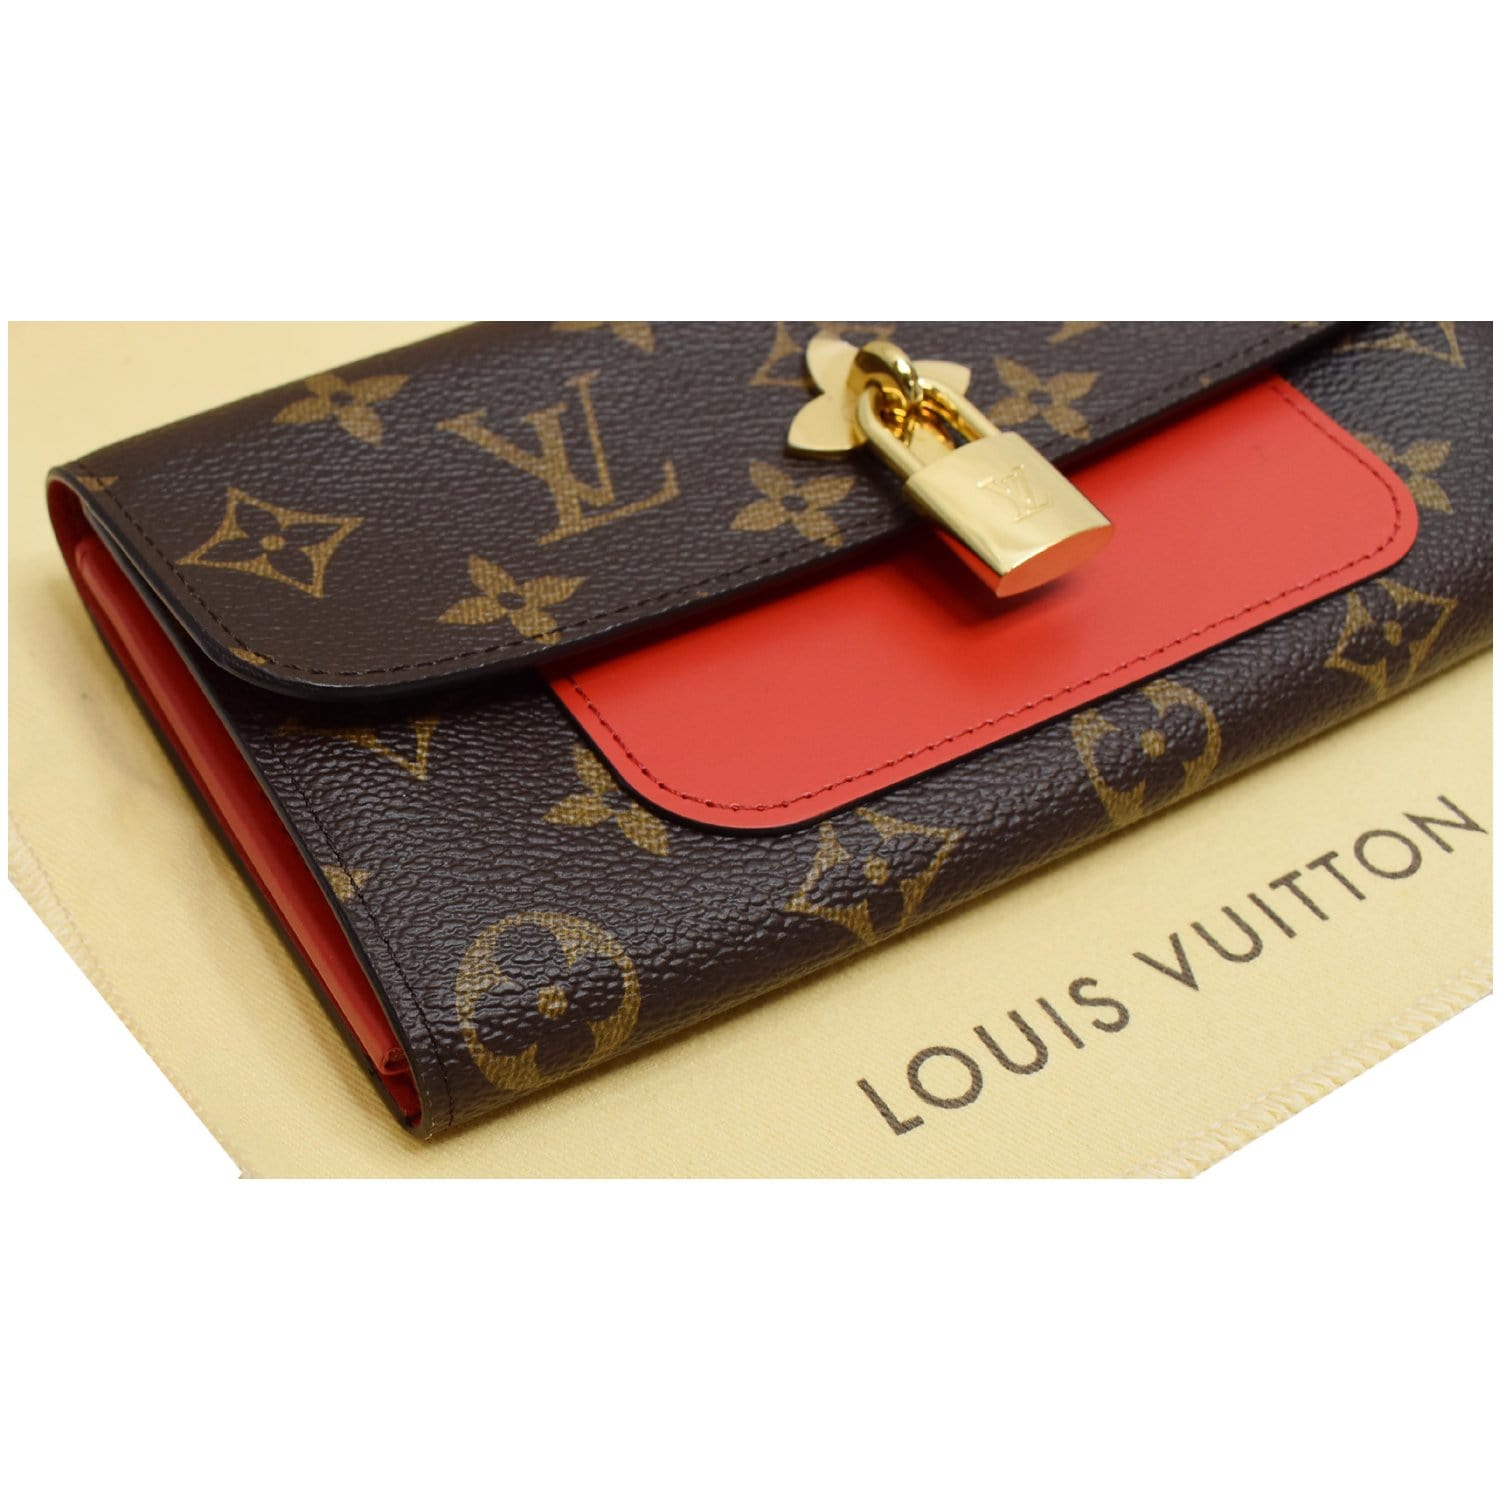 LOUIS VUITTON LV VENUS Bag TOTE Canvas Monogram Red Flap LOCK and KEY